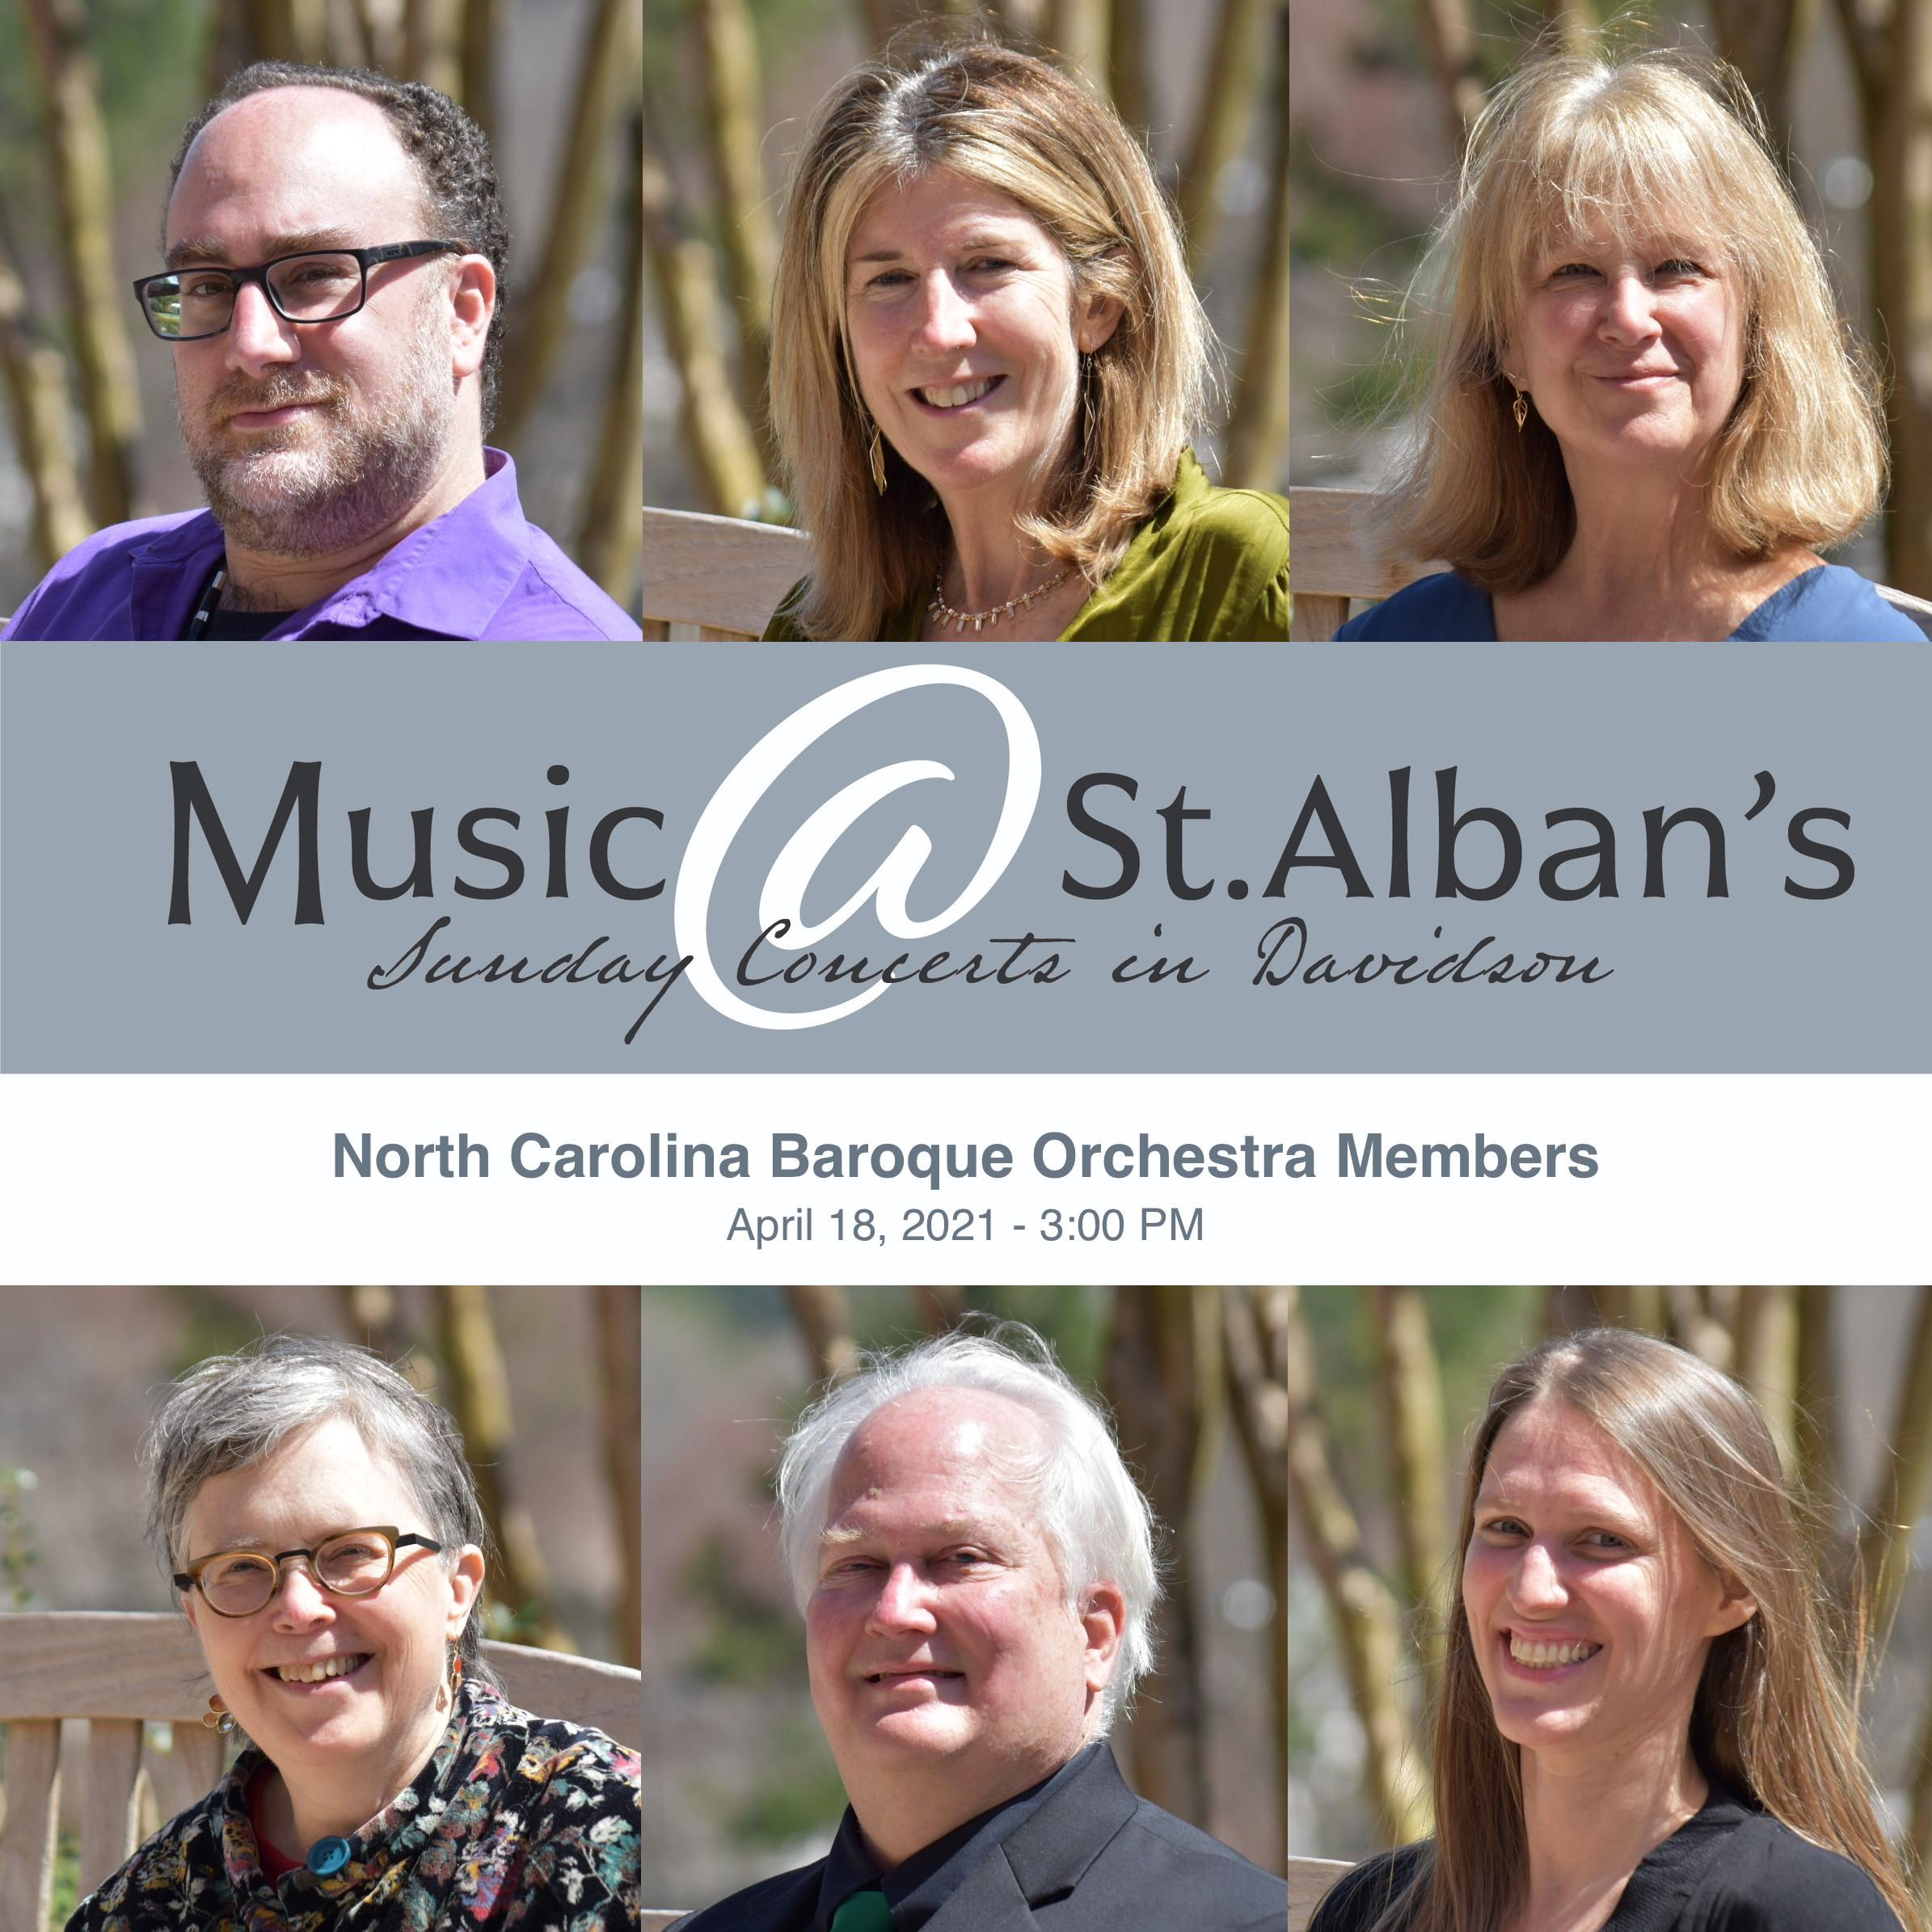 North Carolina Baroque Orchestra Members